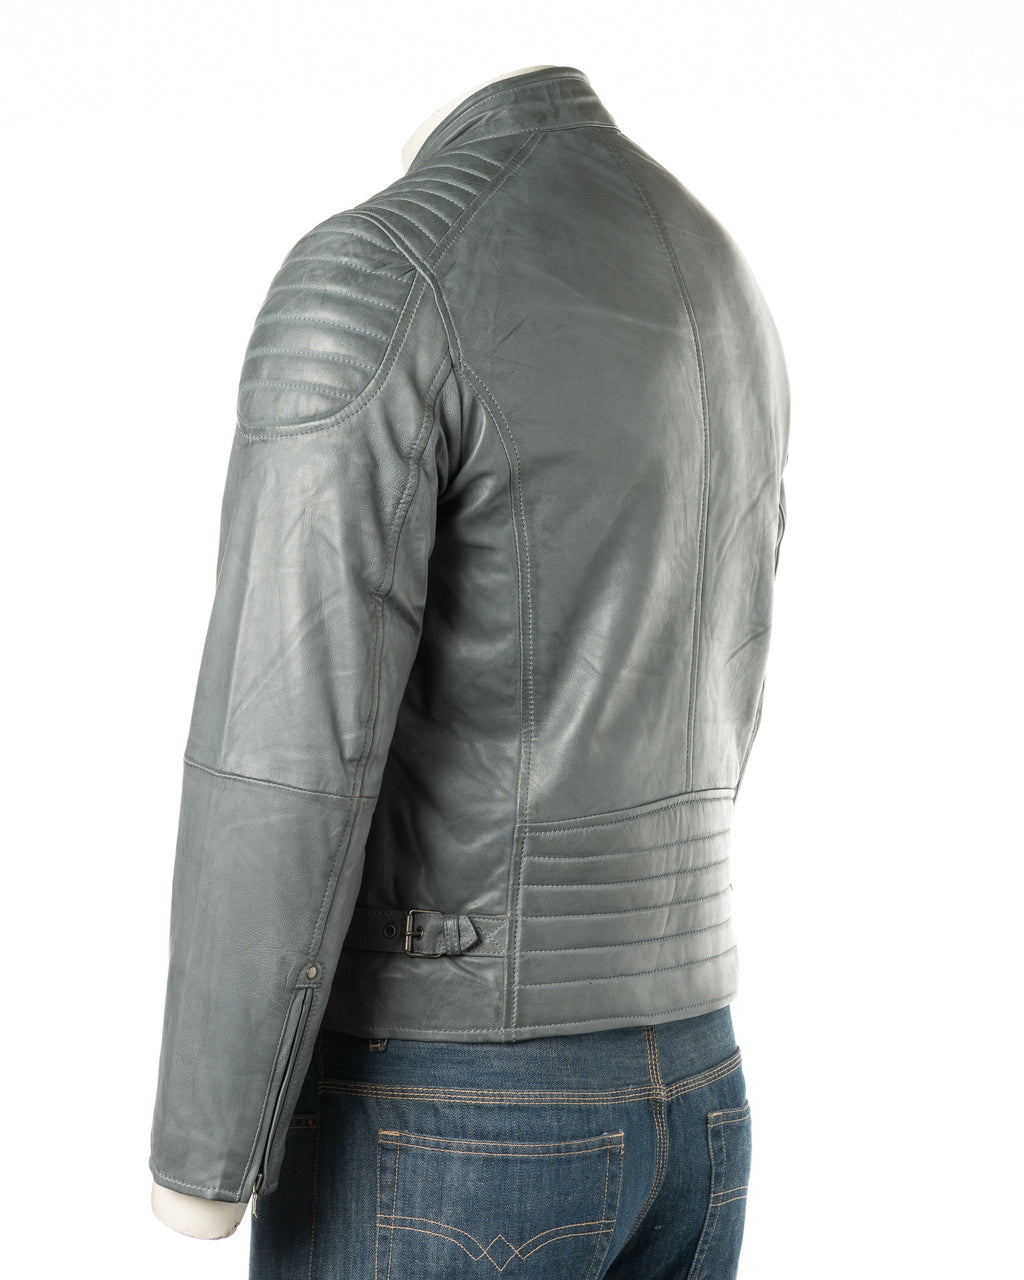 Men's Grey Racer Style Leather Jacket: Ennio